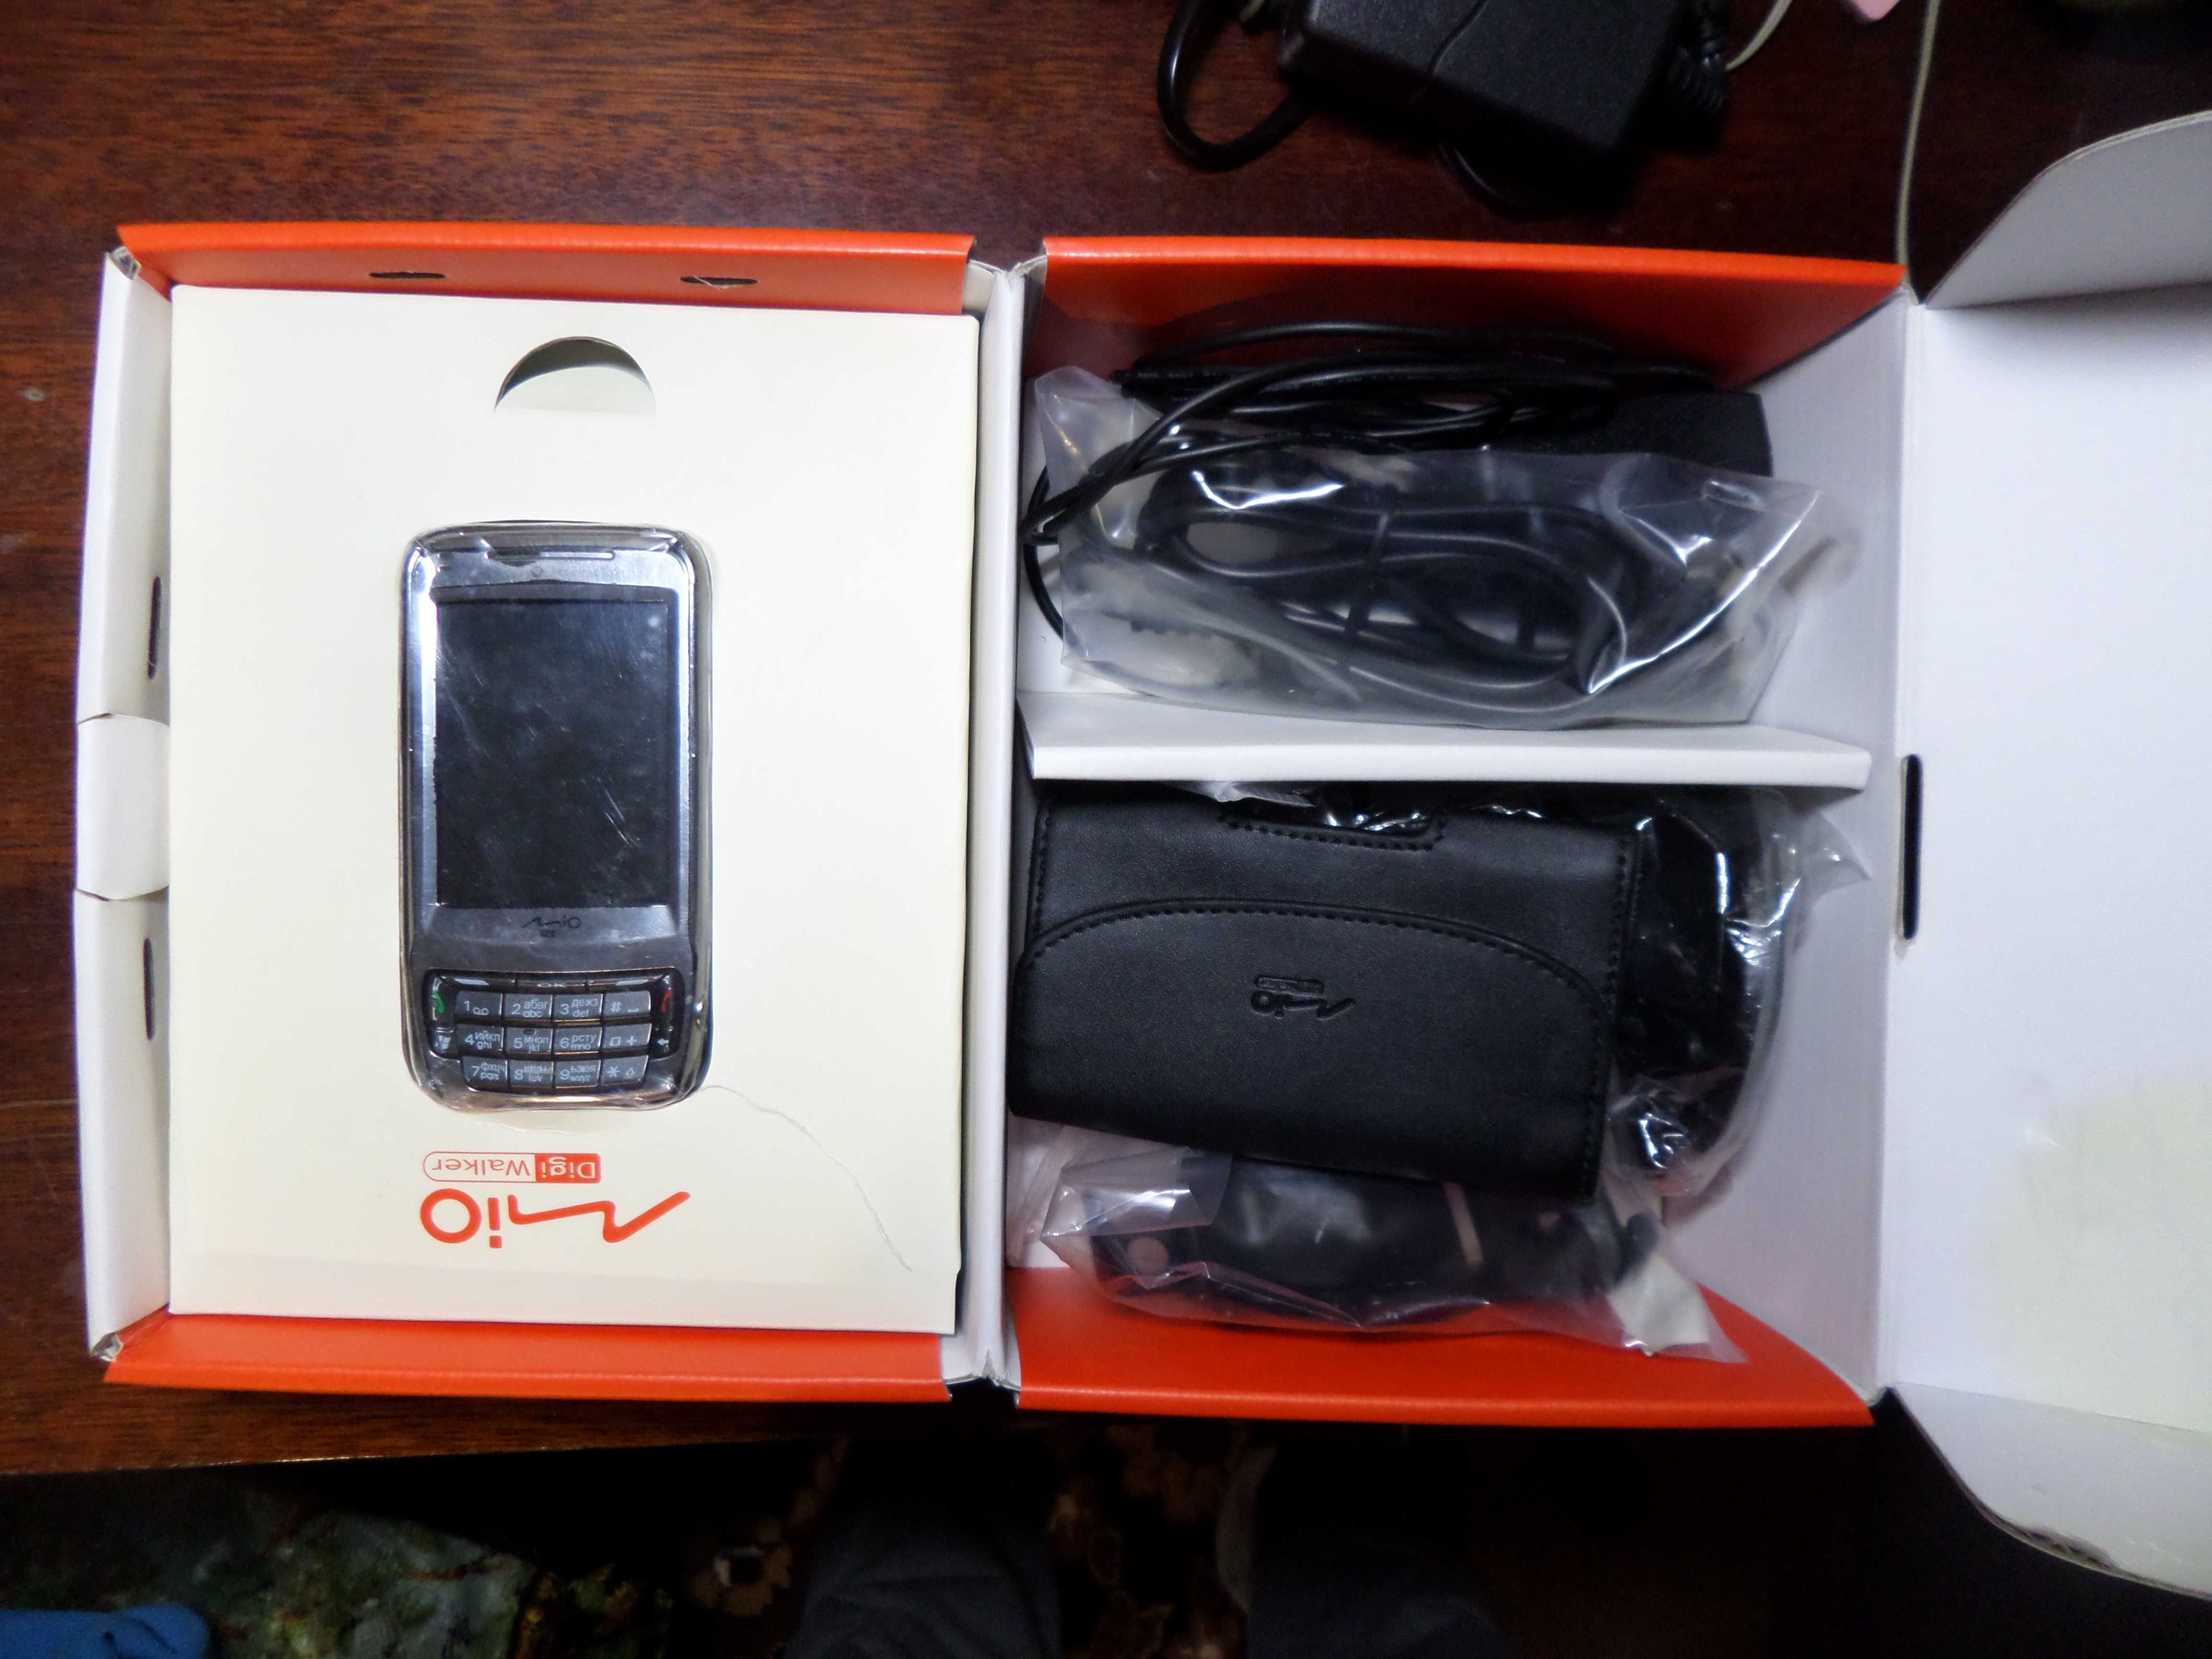 MIO A702,кпк,комунікатор.смартфон